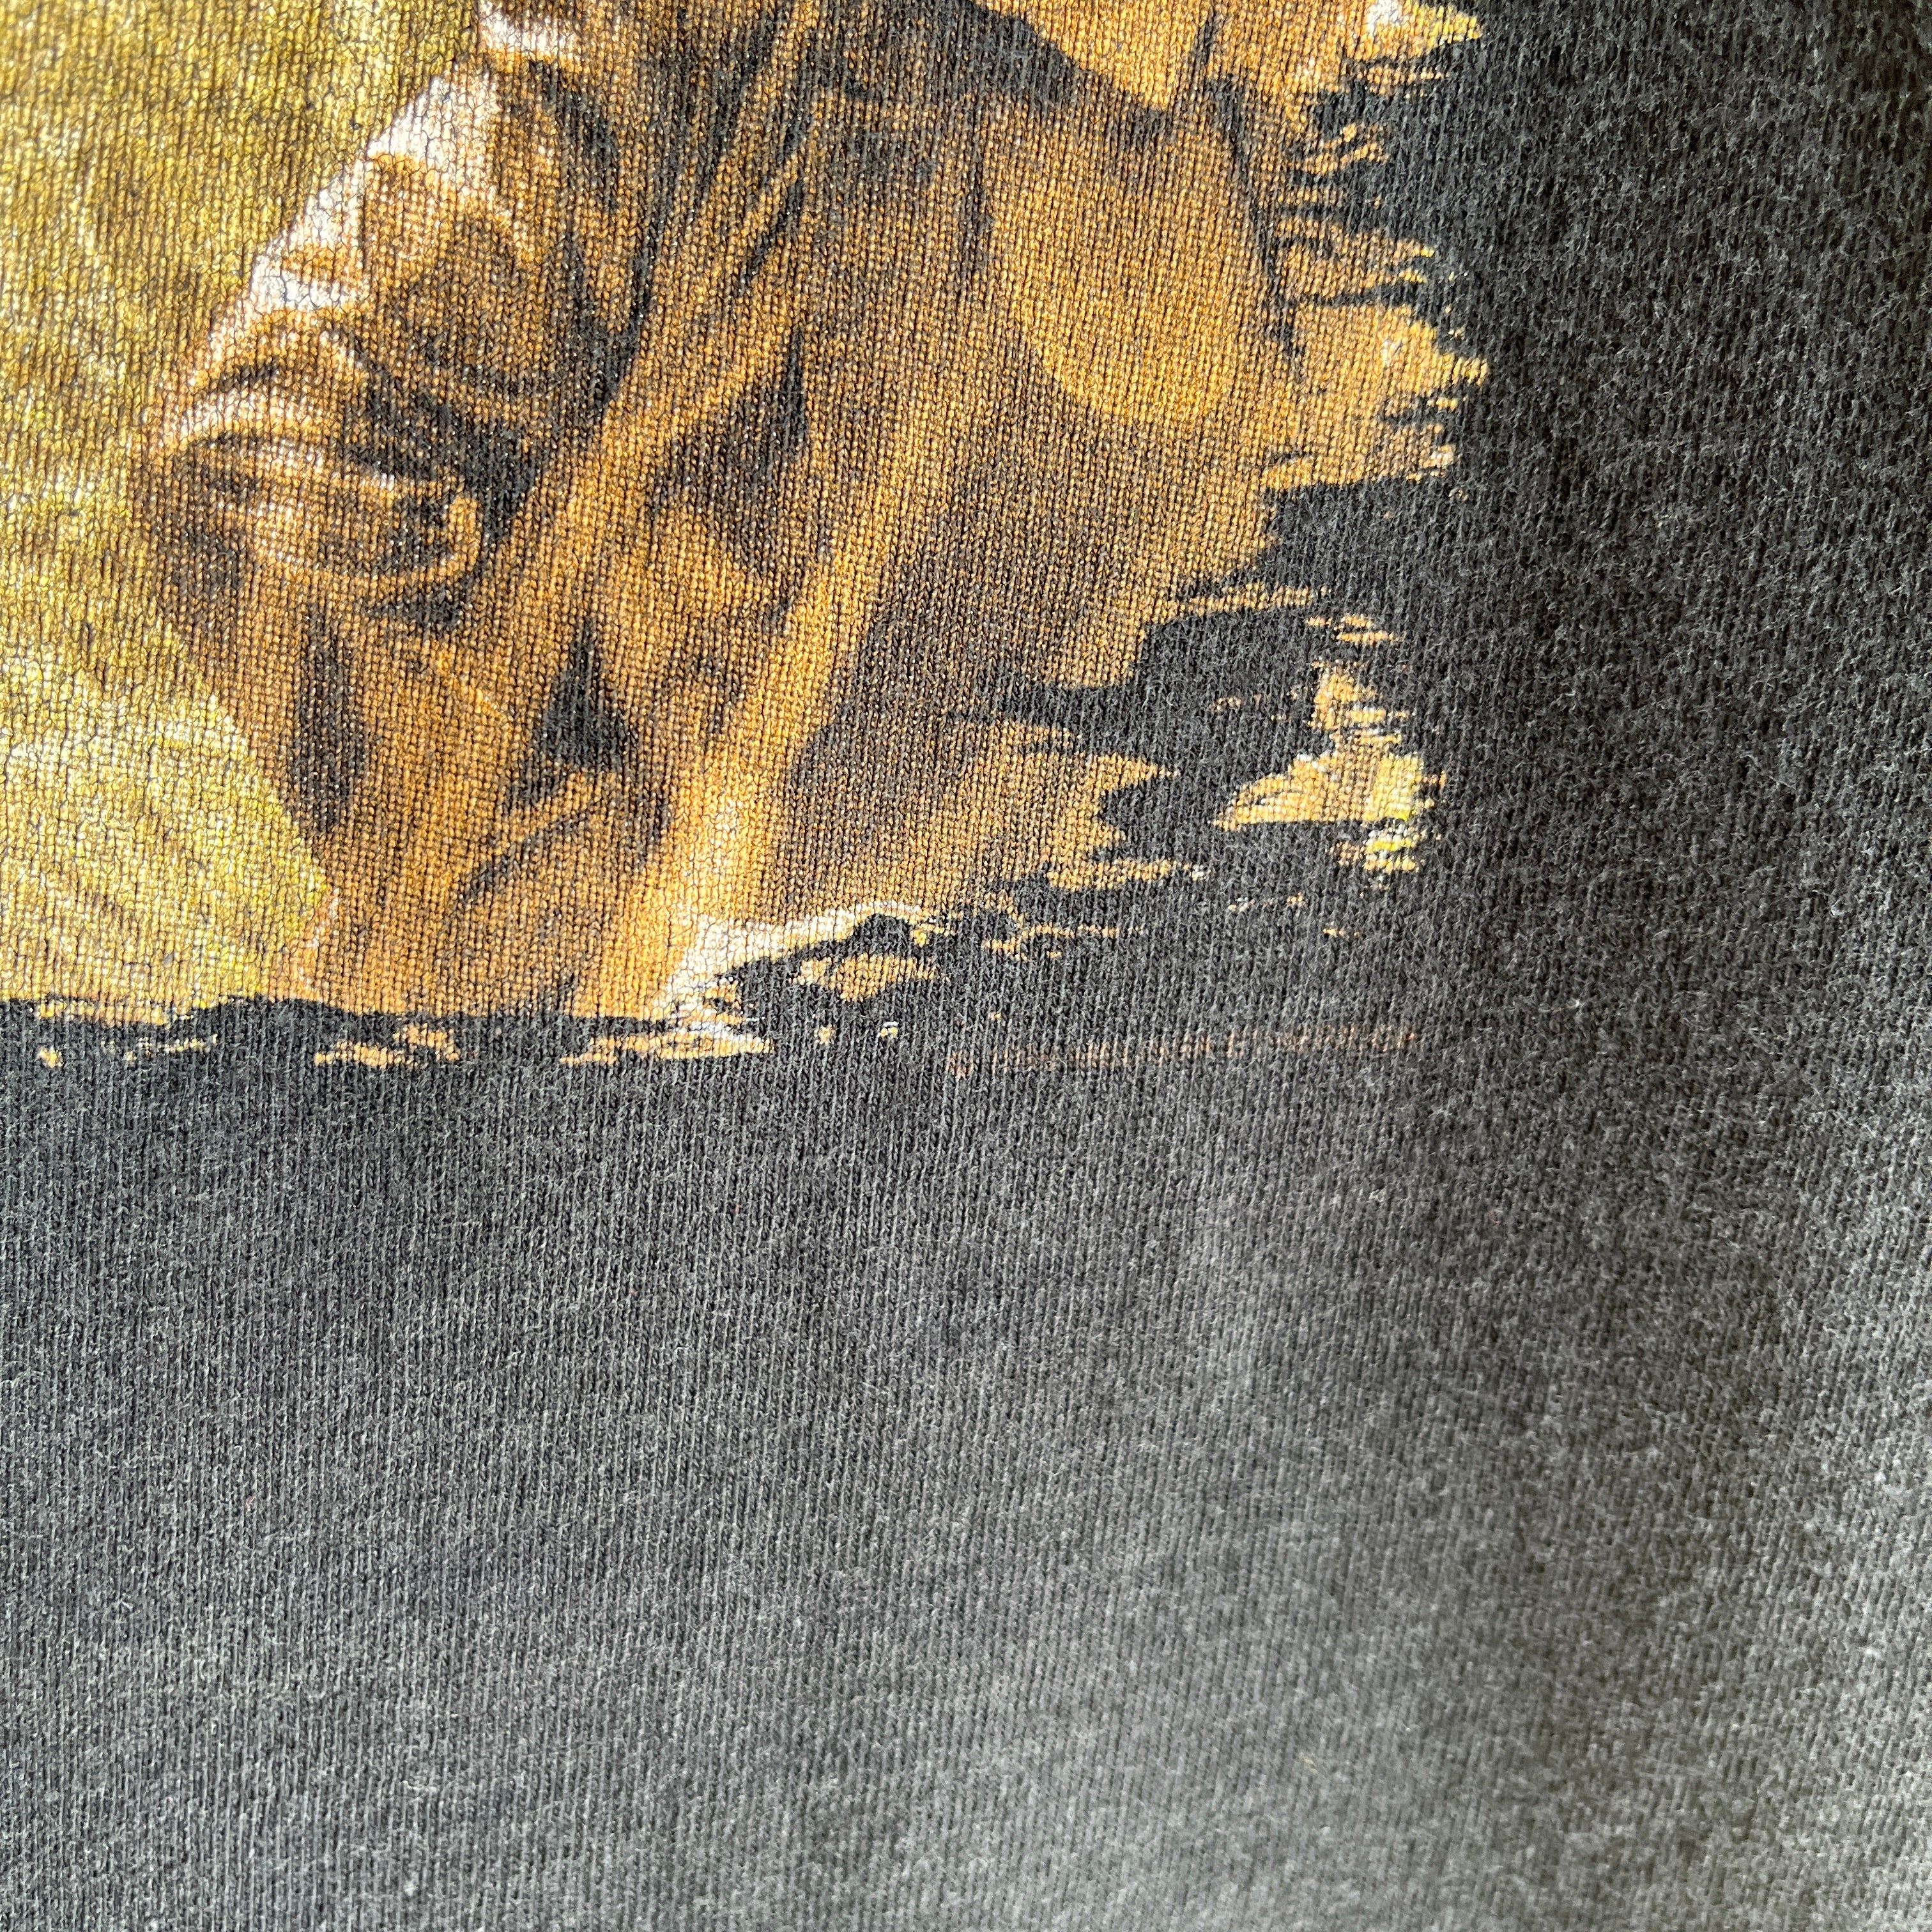 1999 Melissa Etheridge - Breakdown - Front and Back T-Shirt